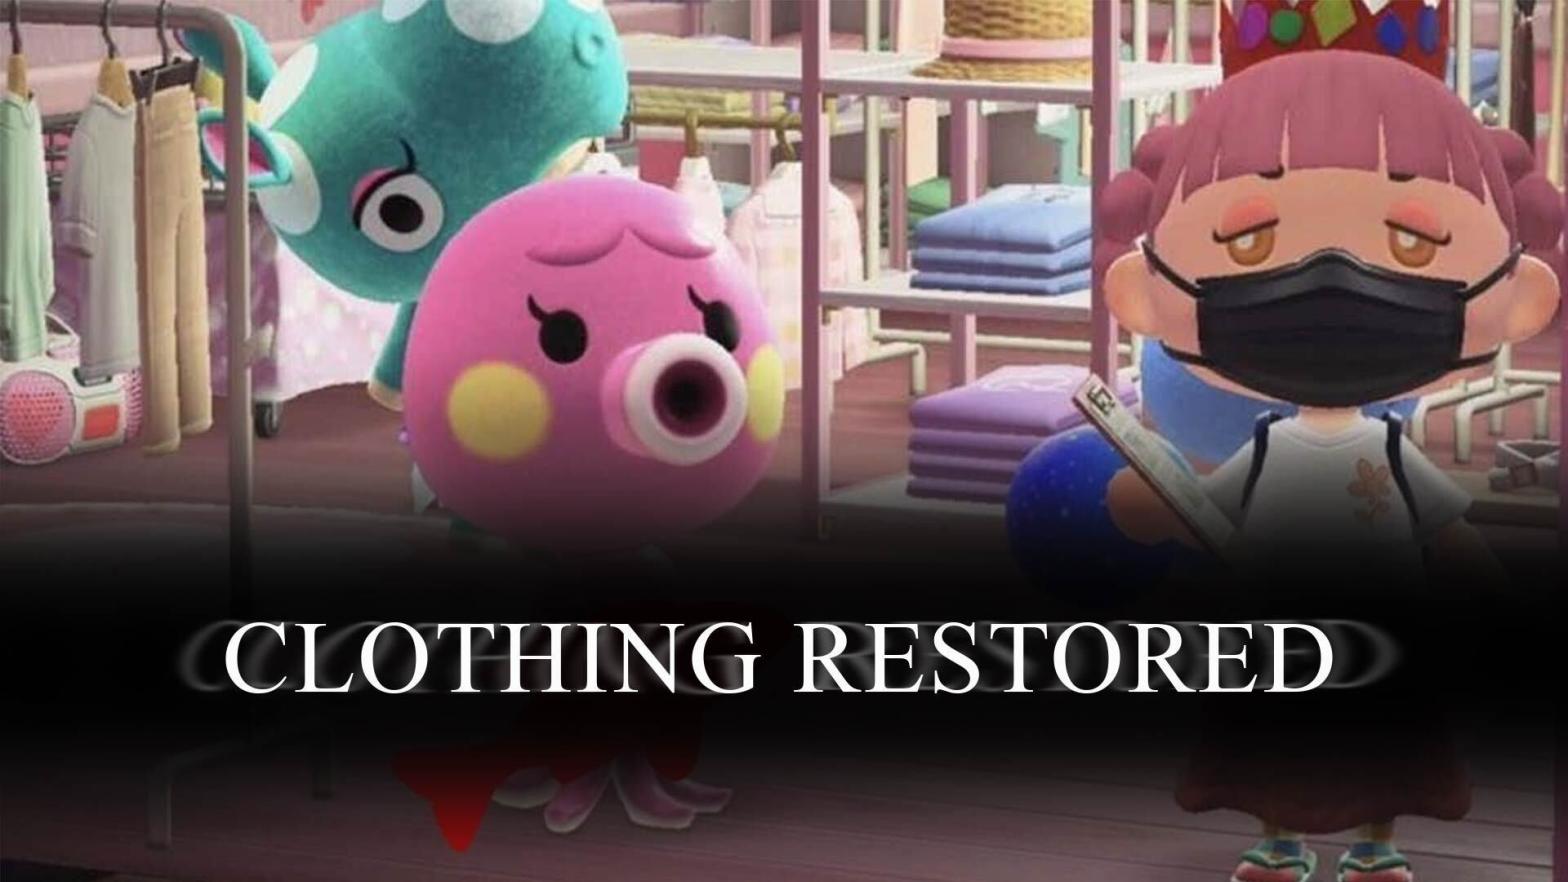 Nudity slain, clothing restored! (Image: Nintendo / lootuska / Kotaku)